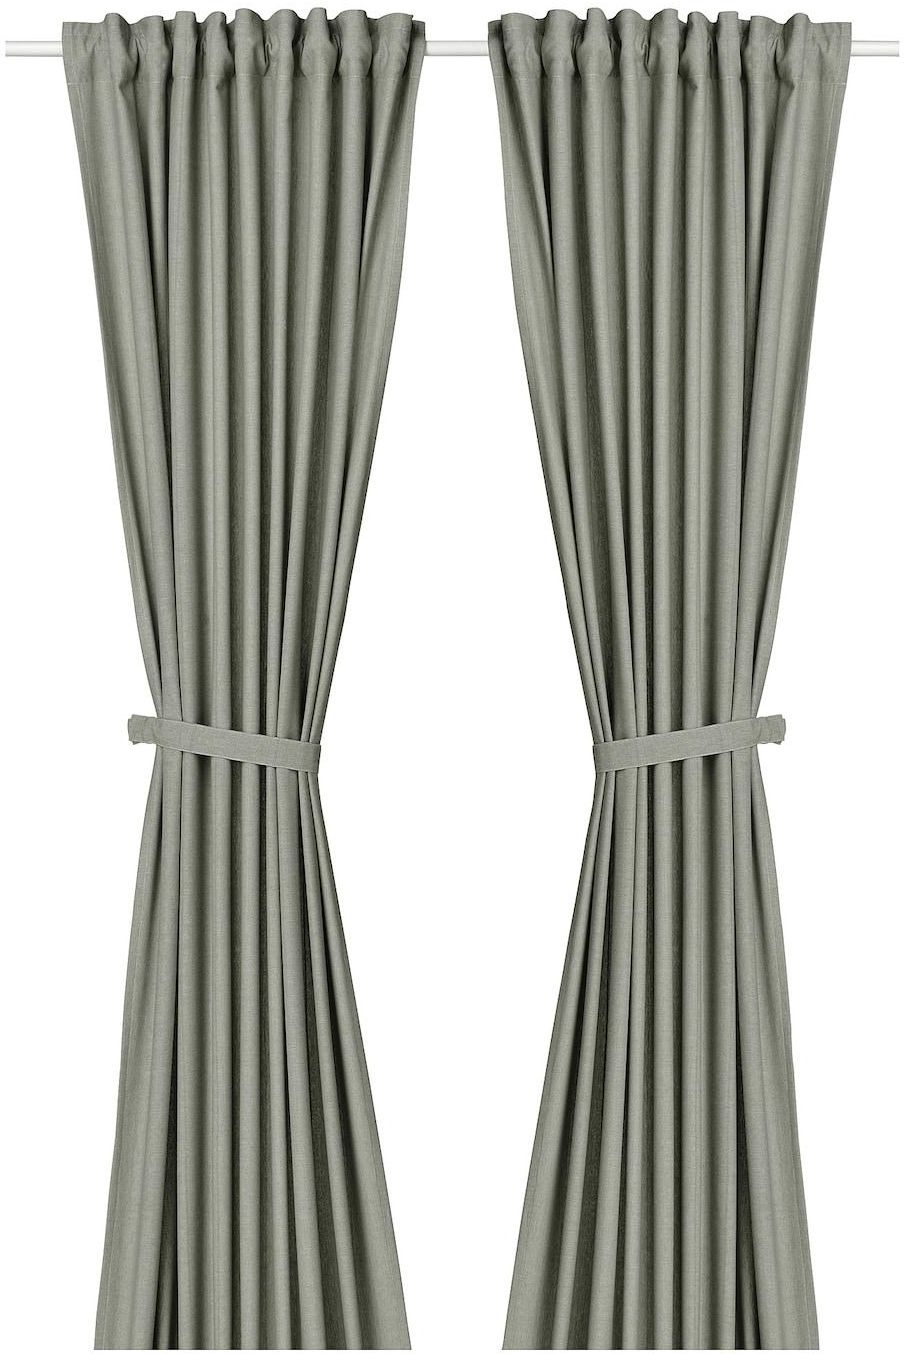 LENDA Curtains with tie-backs, 1 pair - light grey-green 140x300 cm